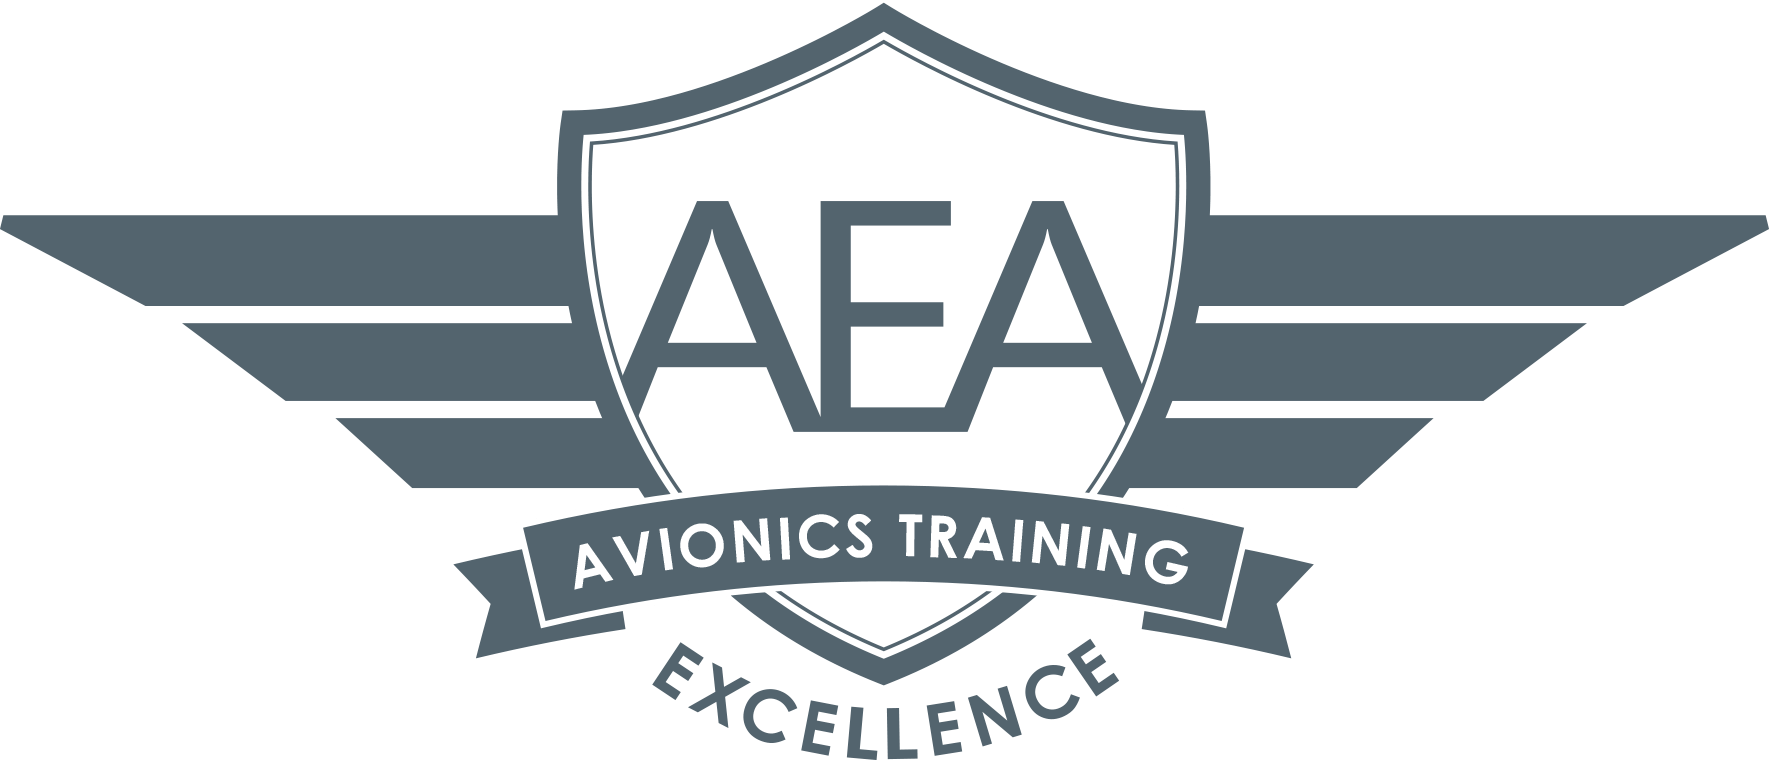 AEA Logo - The Aircraft Electronics Association